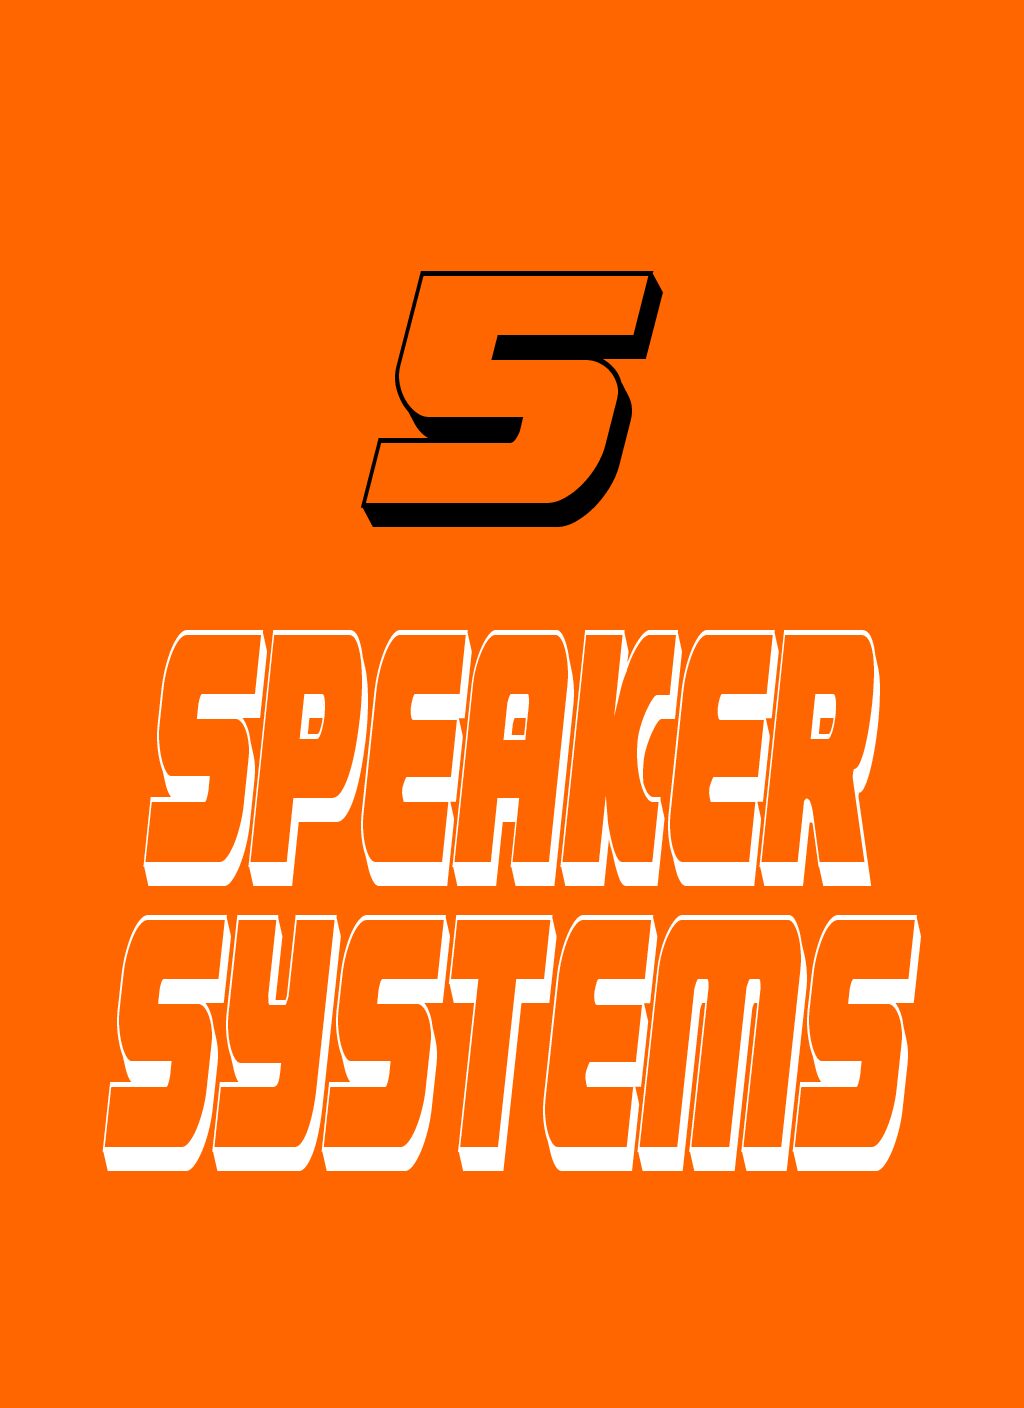 XP PRO 5 SPEAKER SYSTEM